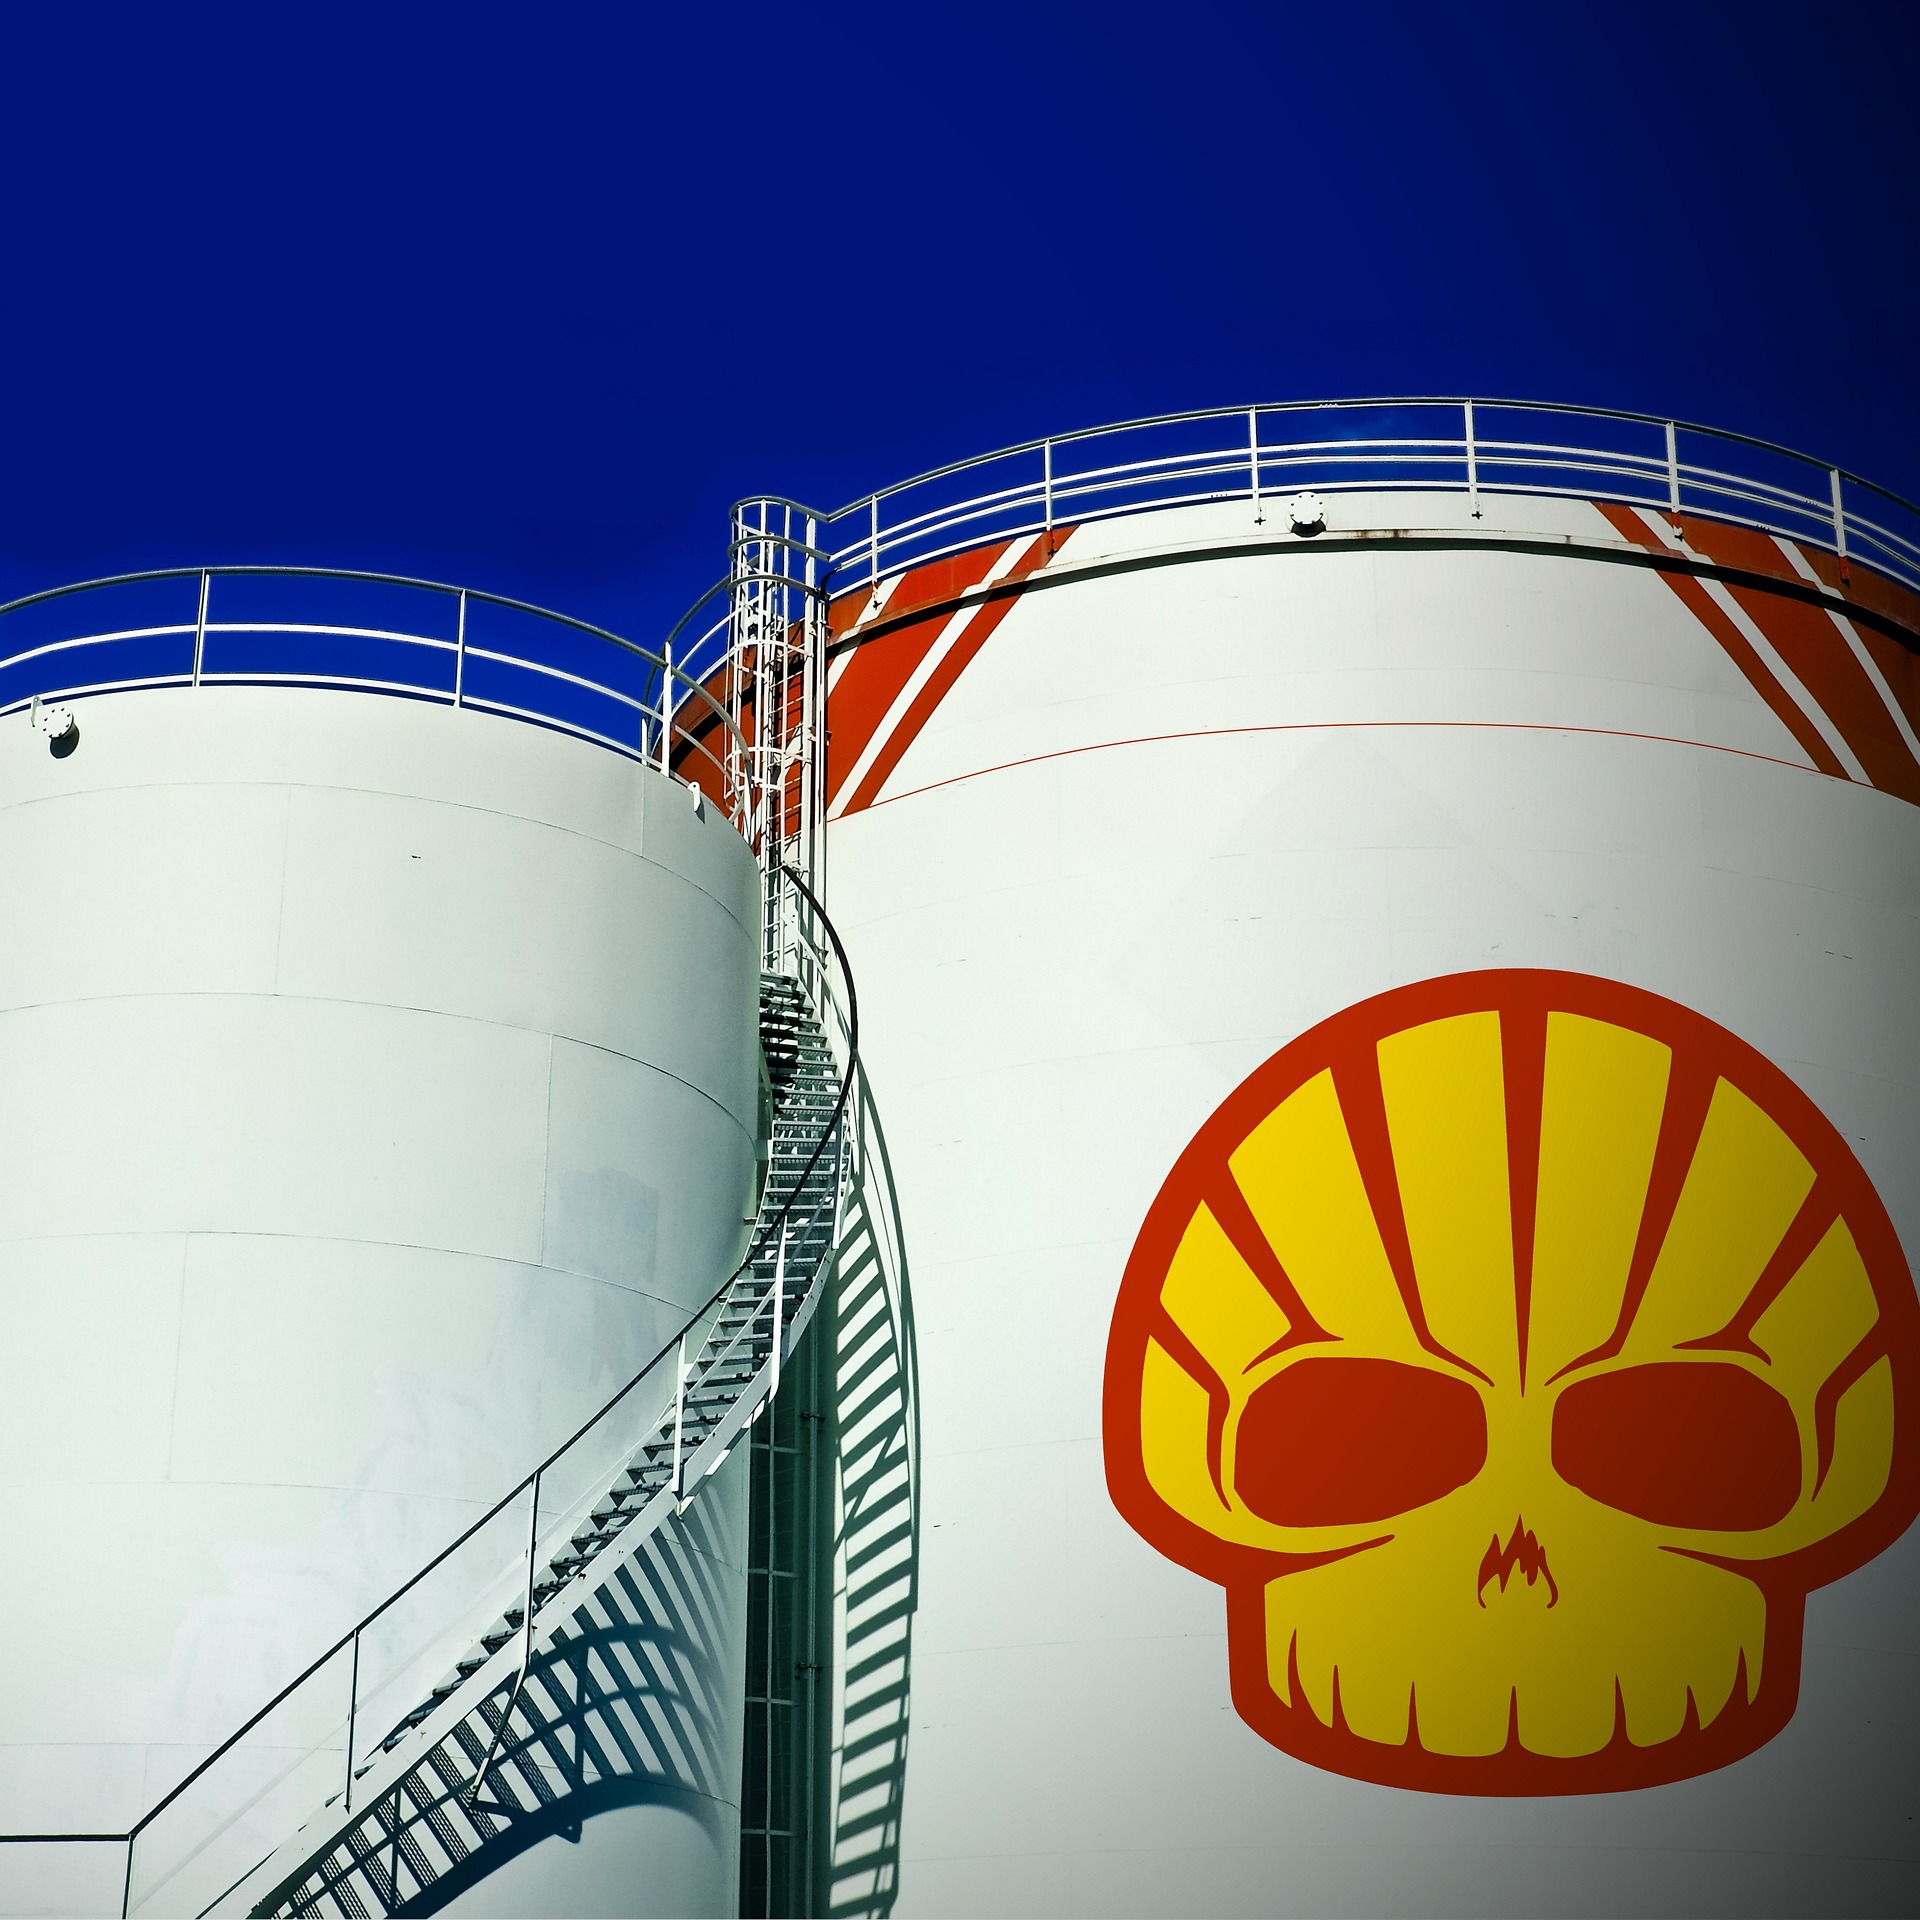 Major Oil Company, Shell, Announces Dividend Increase